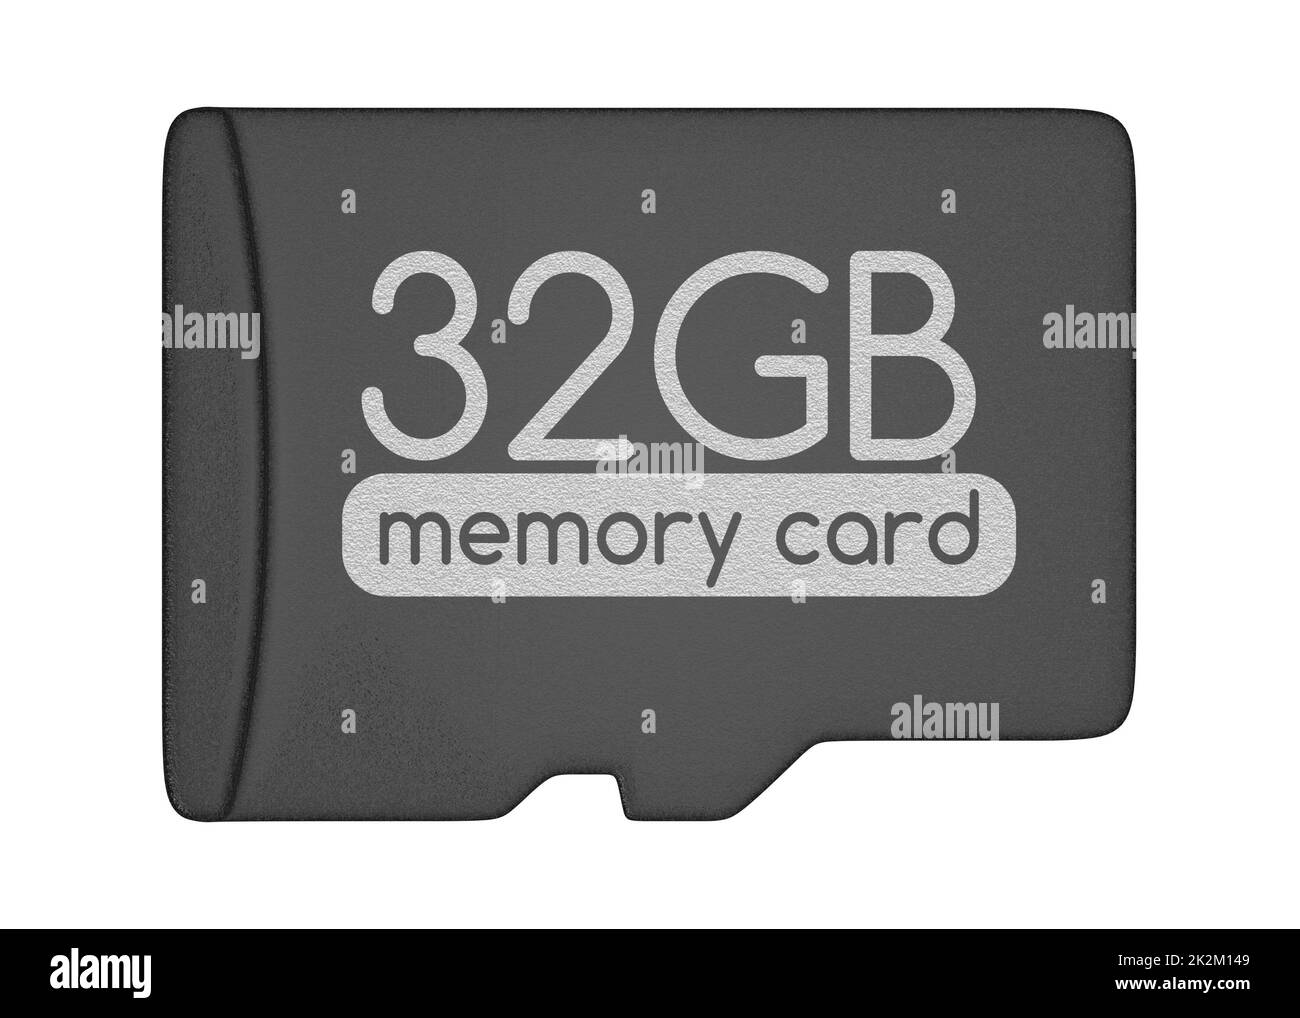 MicroSD memory card. Stock Photo